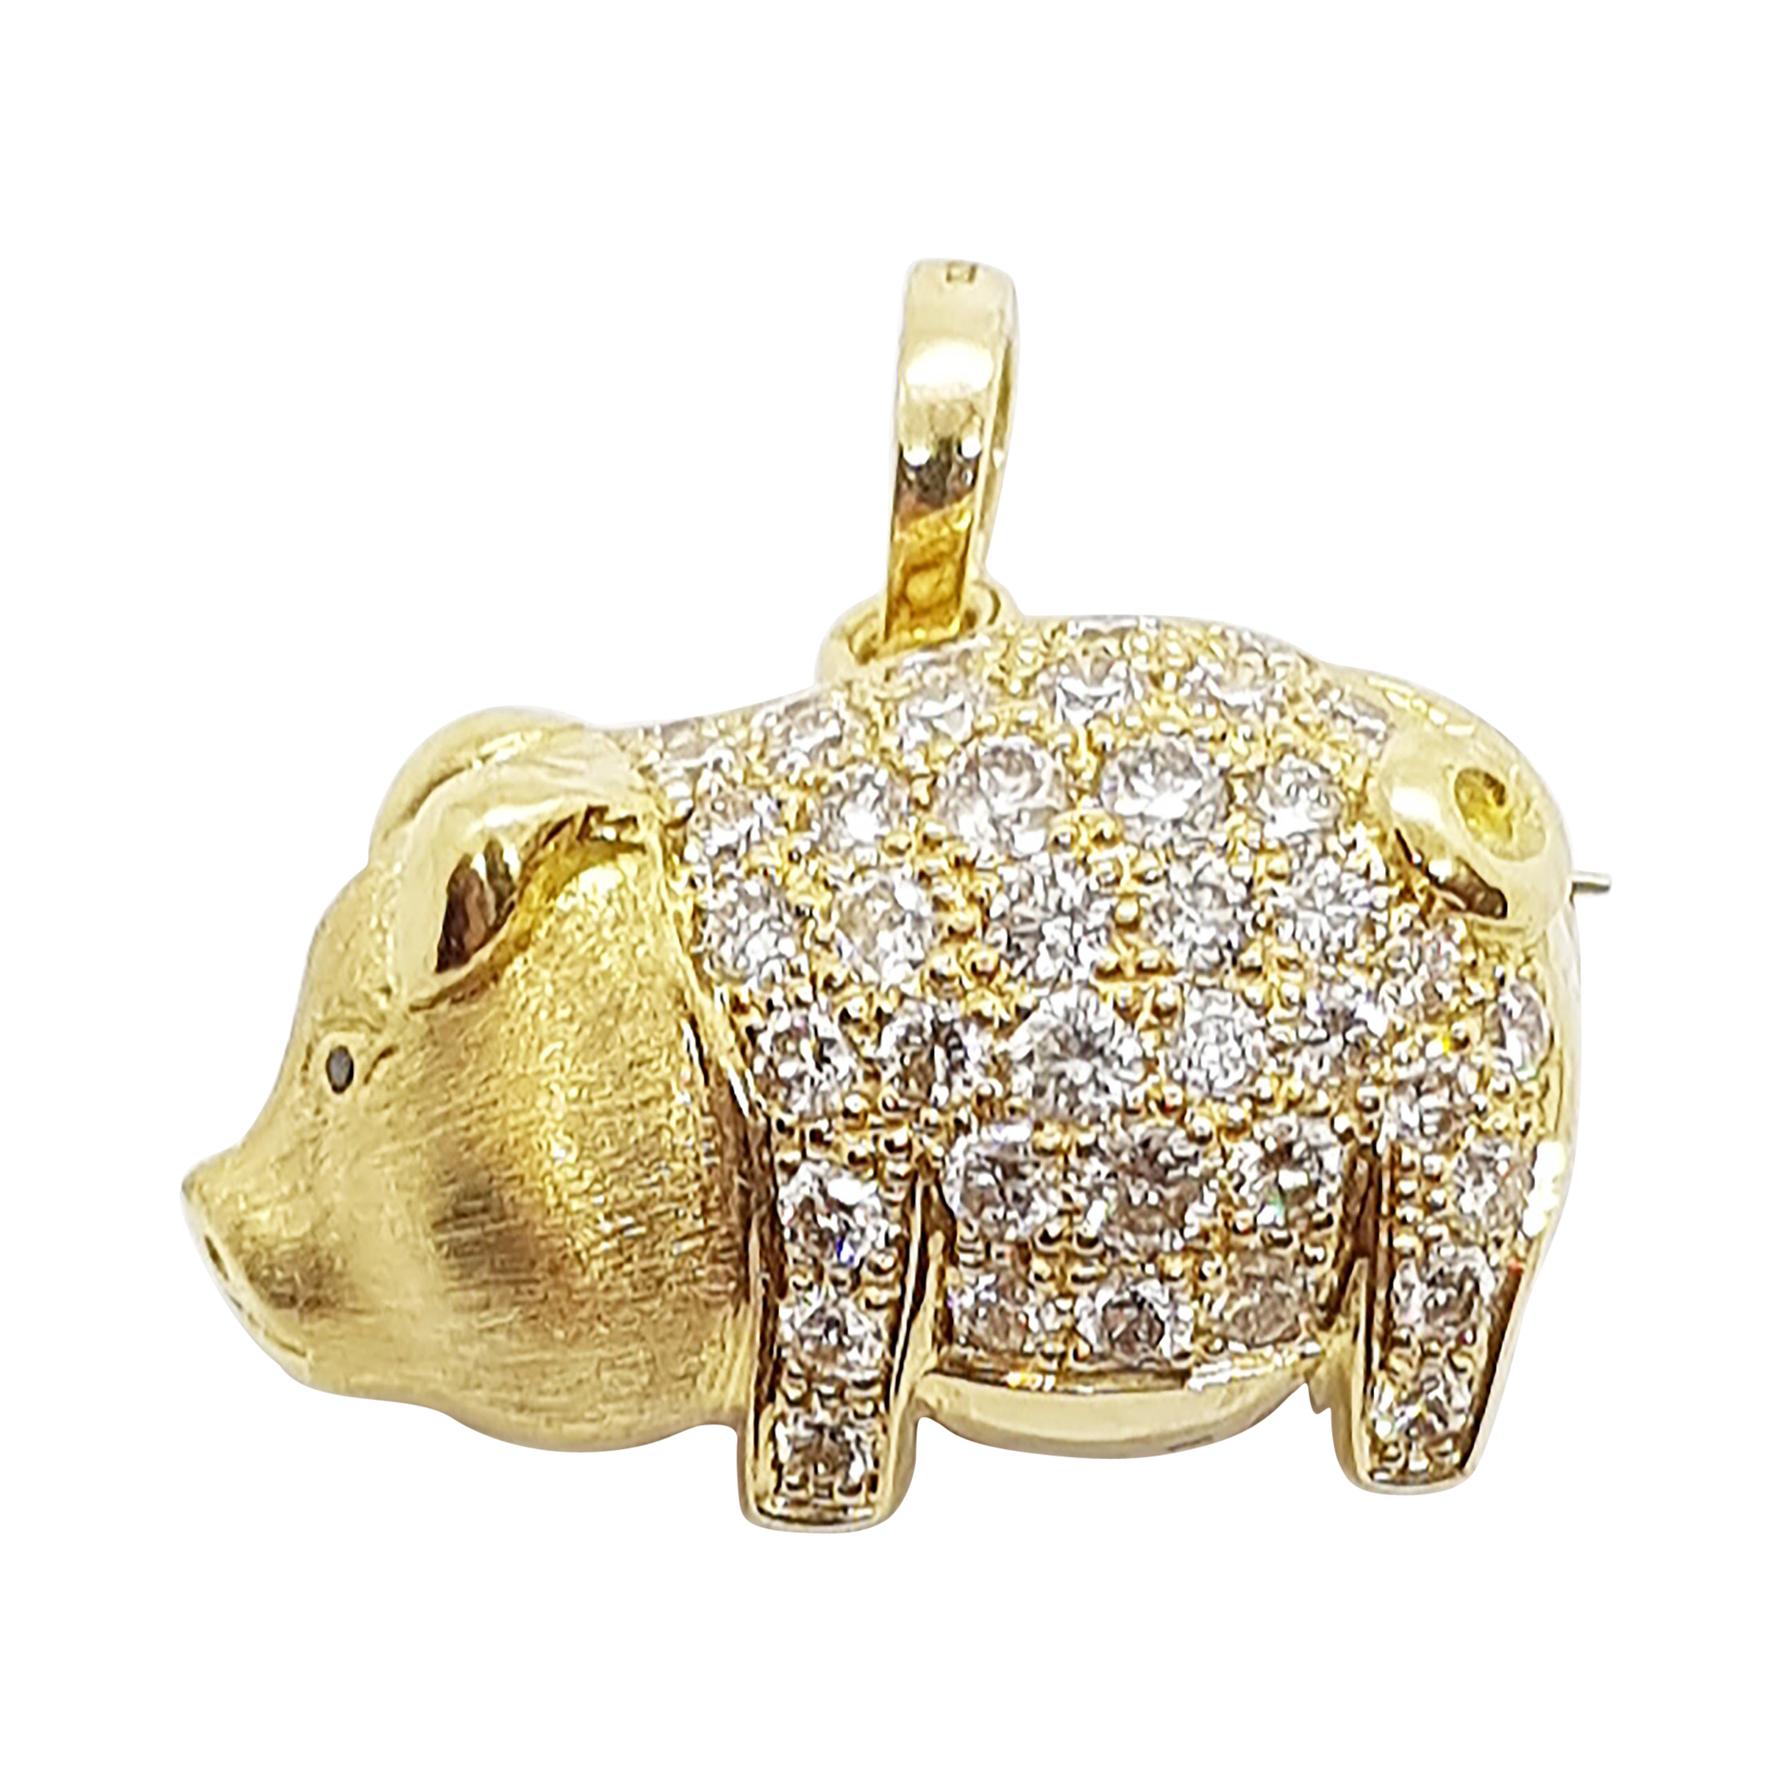 Broche/pendentif en forme de porc en or 18 carats sertie de diamants noirs et de diamants